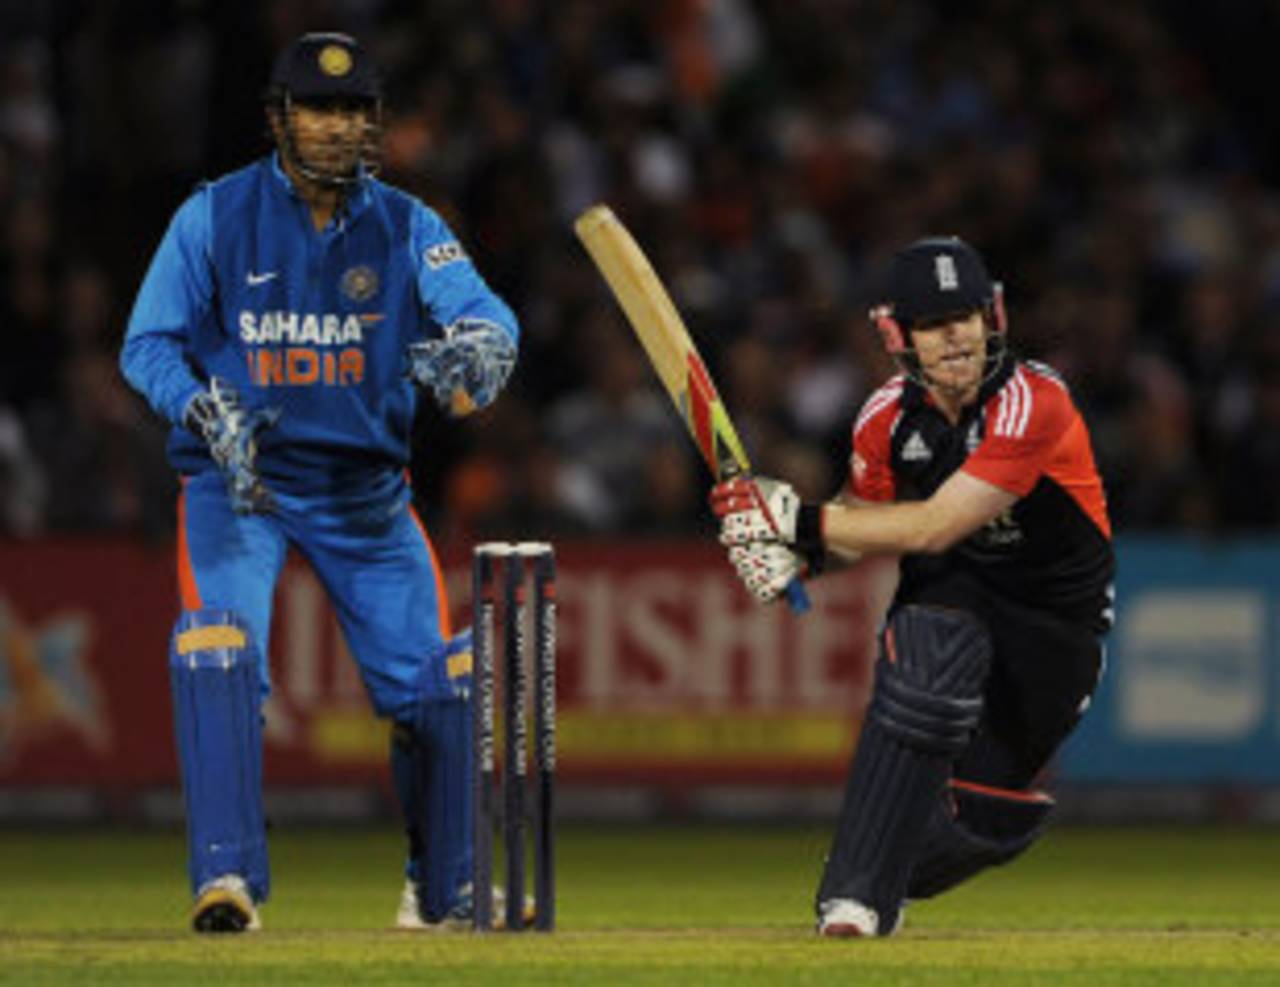 Eoin Morgan made a superb 49 to guide England, England v India, Twenty20, Old Trafford, August 31, 2011